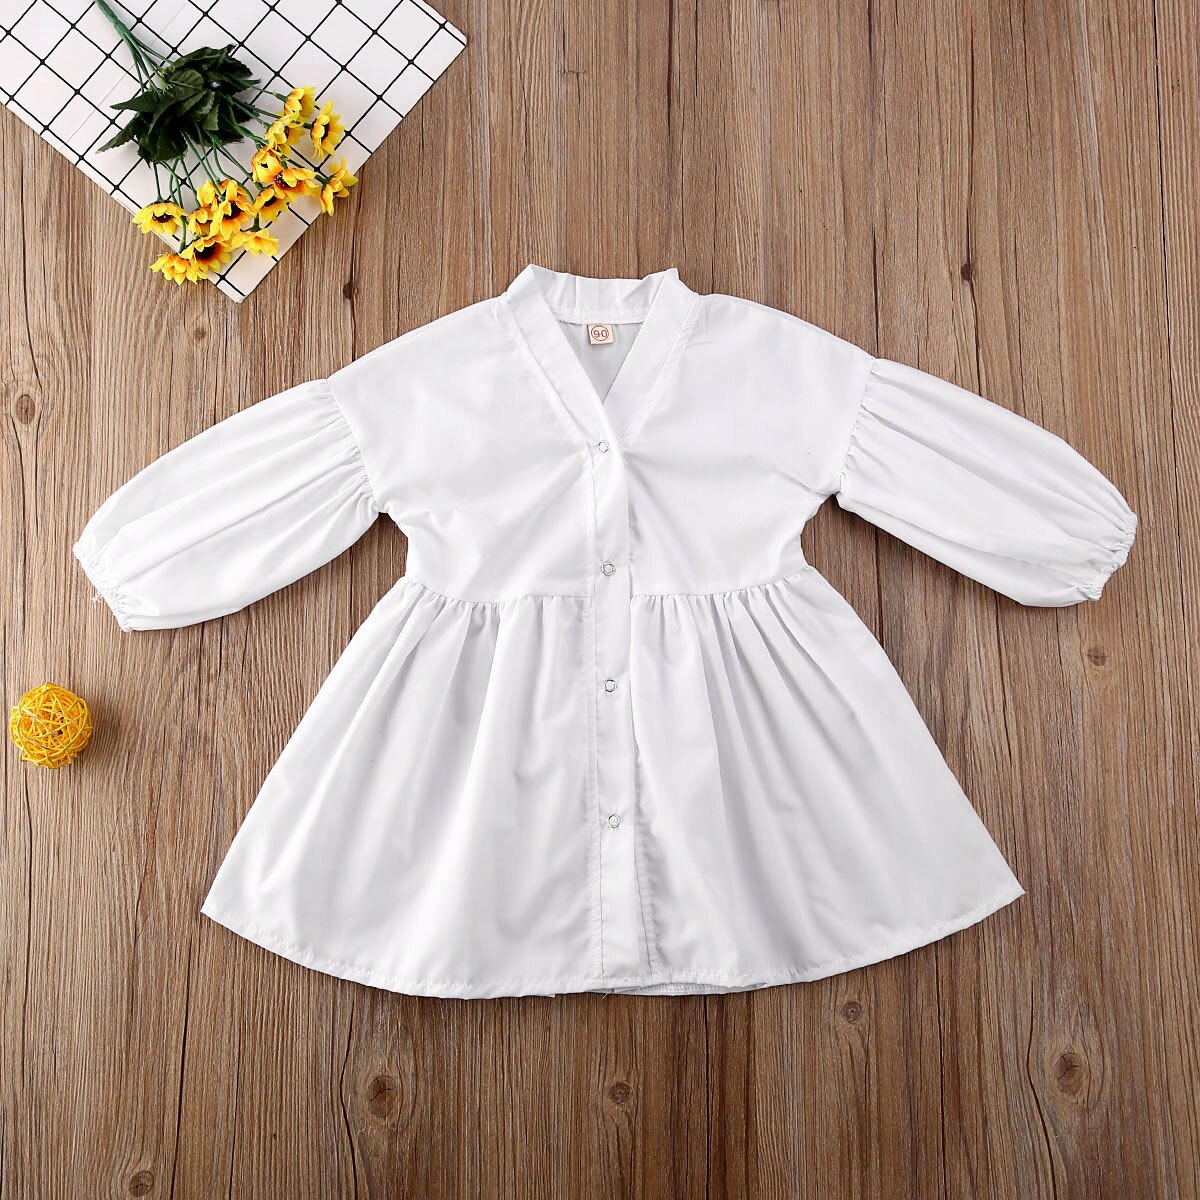 Pudcoco toddler baby pige tøj ensfarvet puff langærmet skjorte toppe talje bindende tøj tøj 1-6y